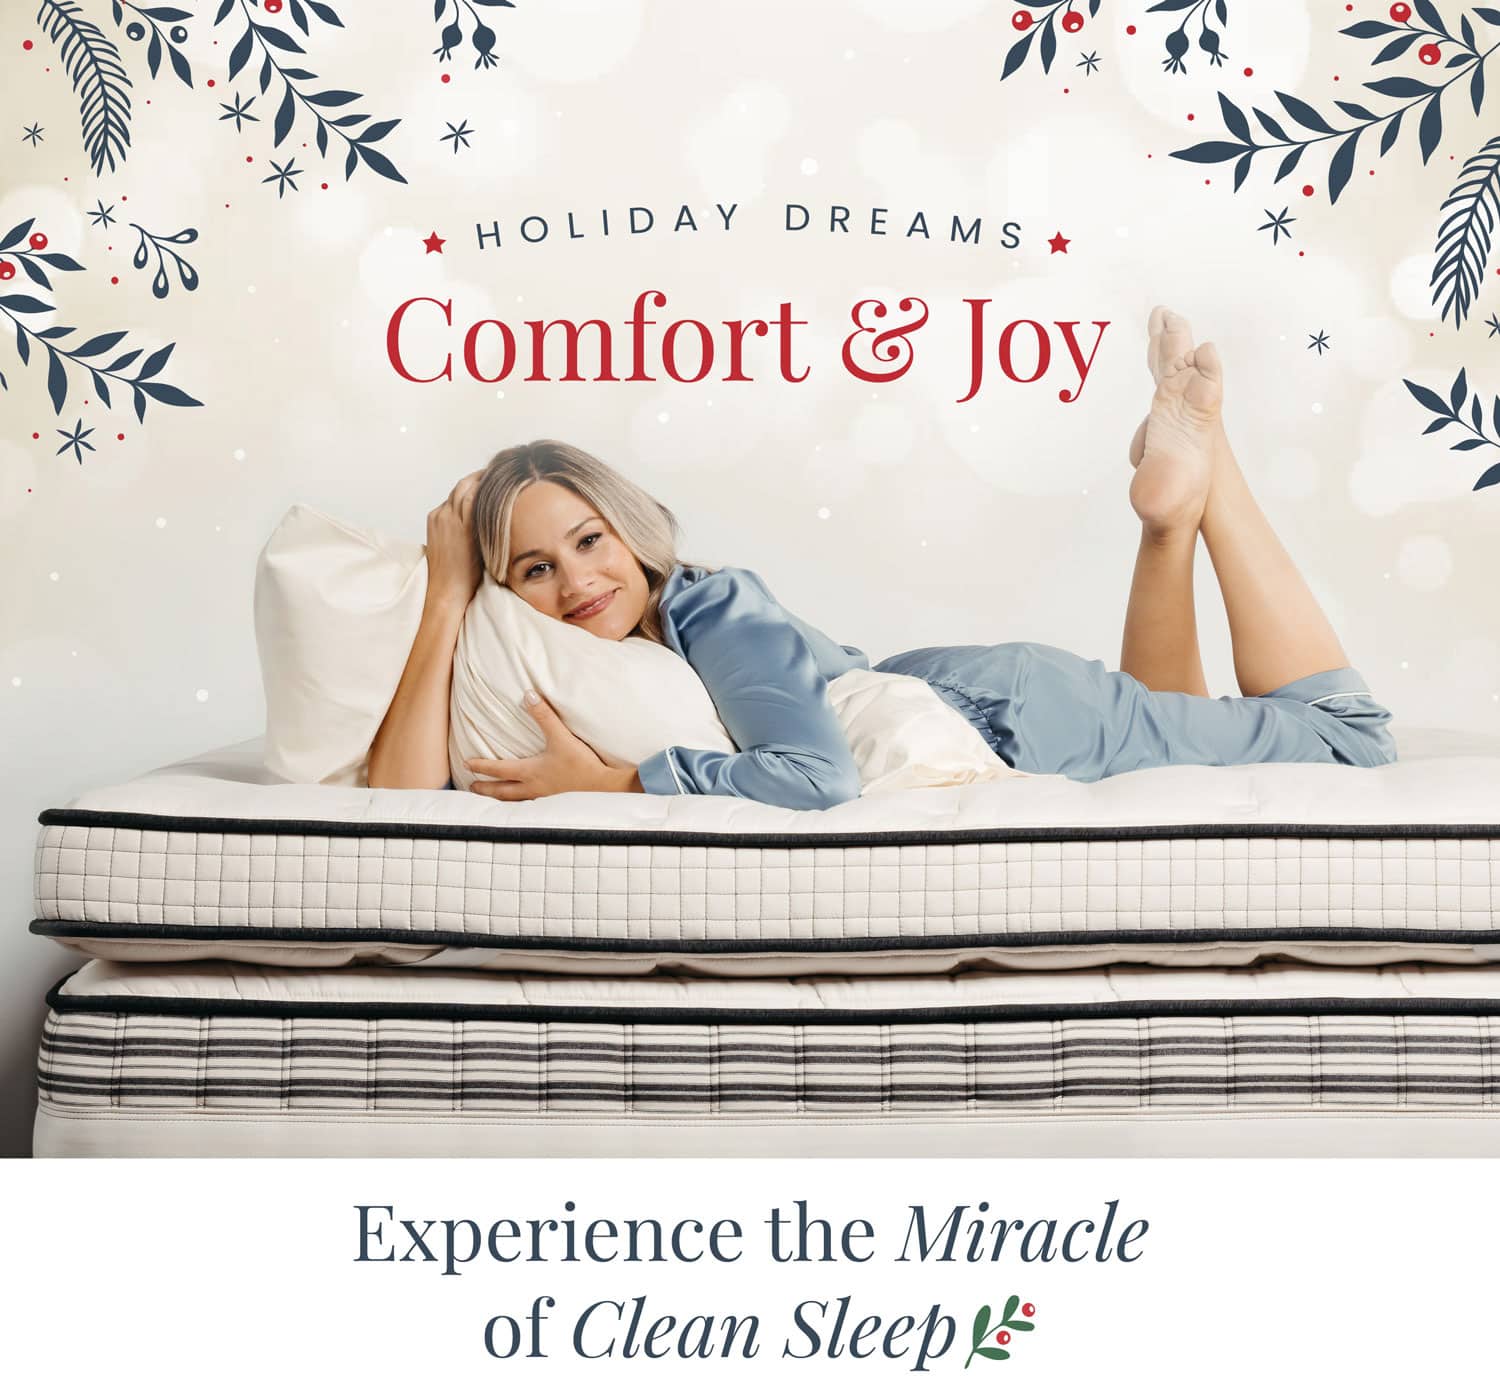 Comfort & Joy - Get a FREE Gift Set - Promotion Temp Landing Page 2022 DEC Top